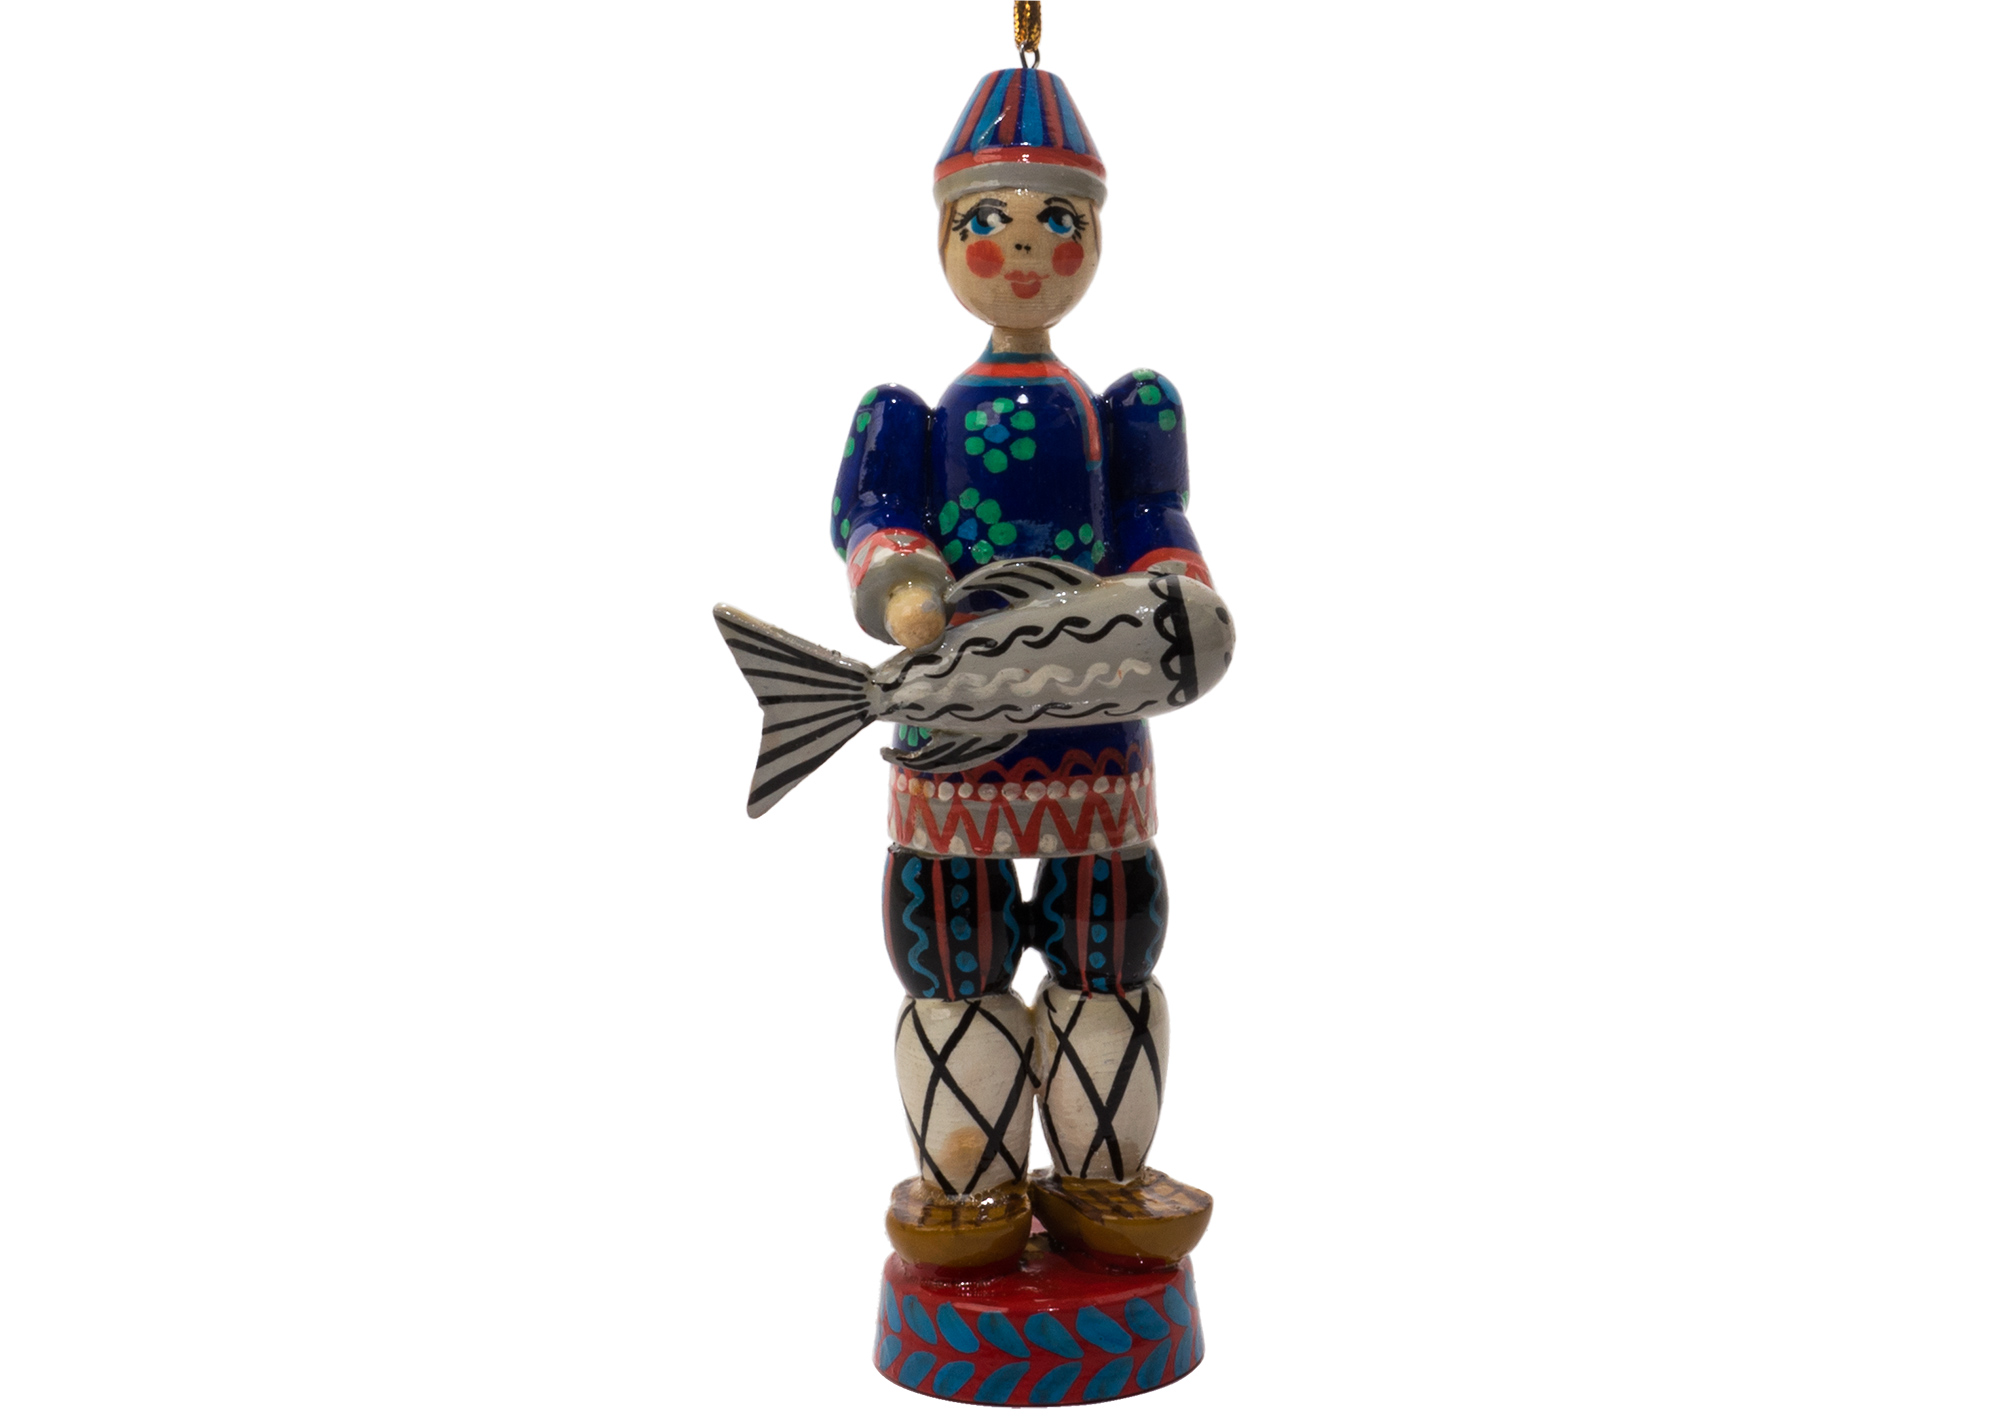 Buy Russian Folk Fisherman Ornament 5" at GoldenCockerel.com